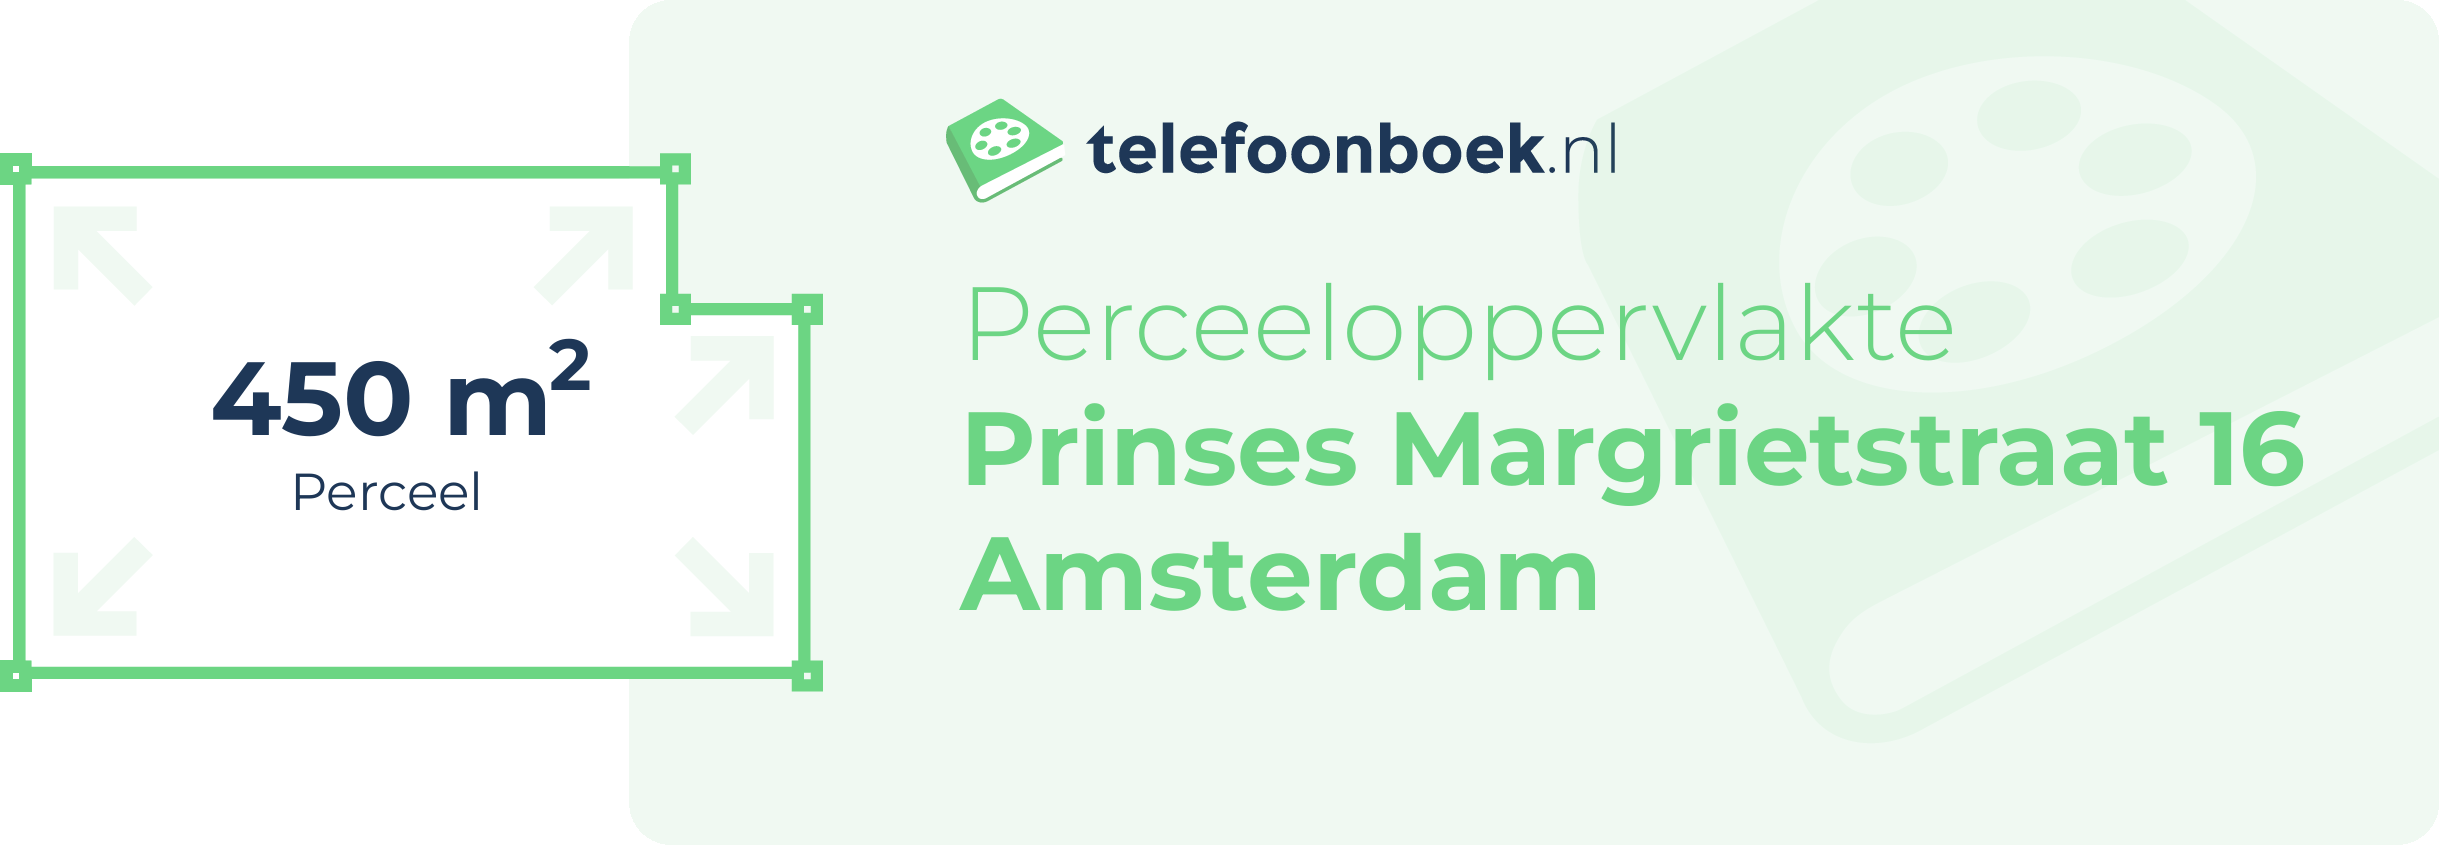 Perceeloppervlakte Prinses Margrietstraat 16 Amsterdam